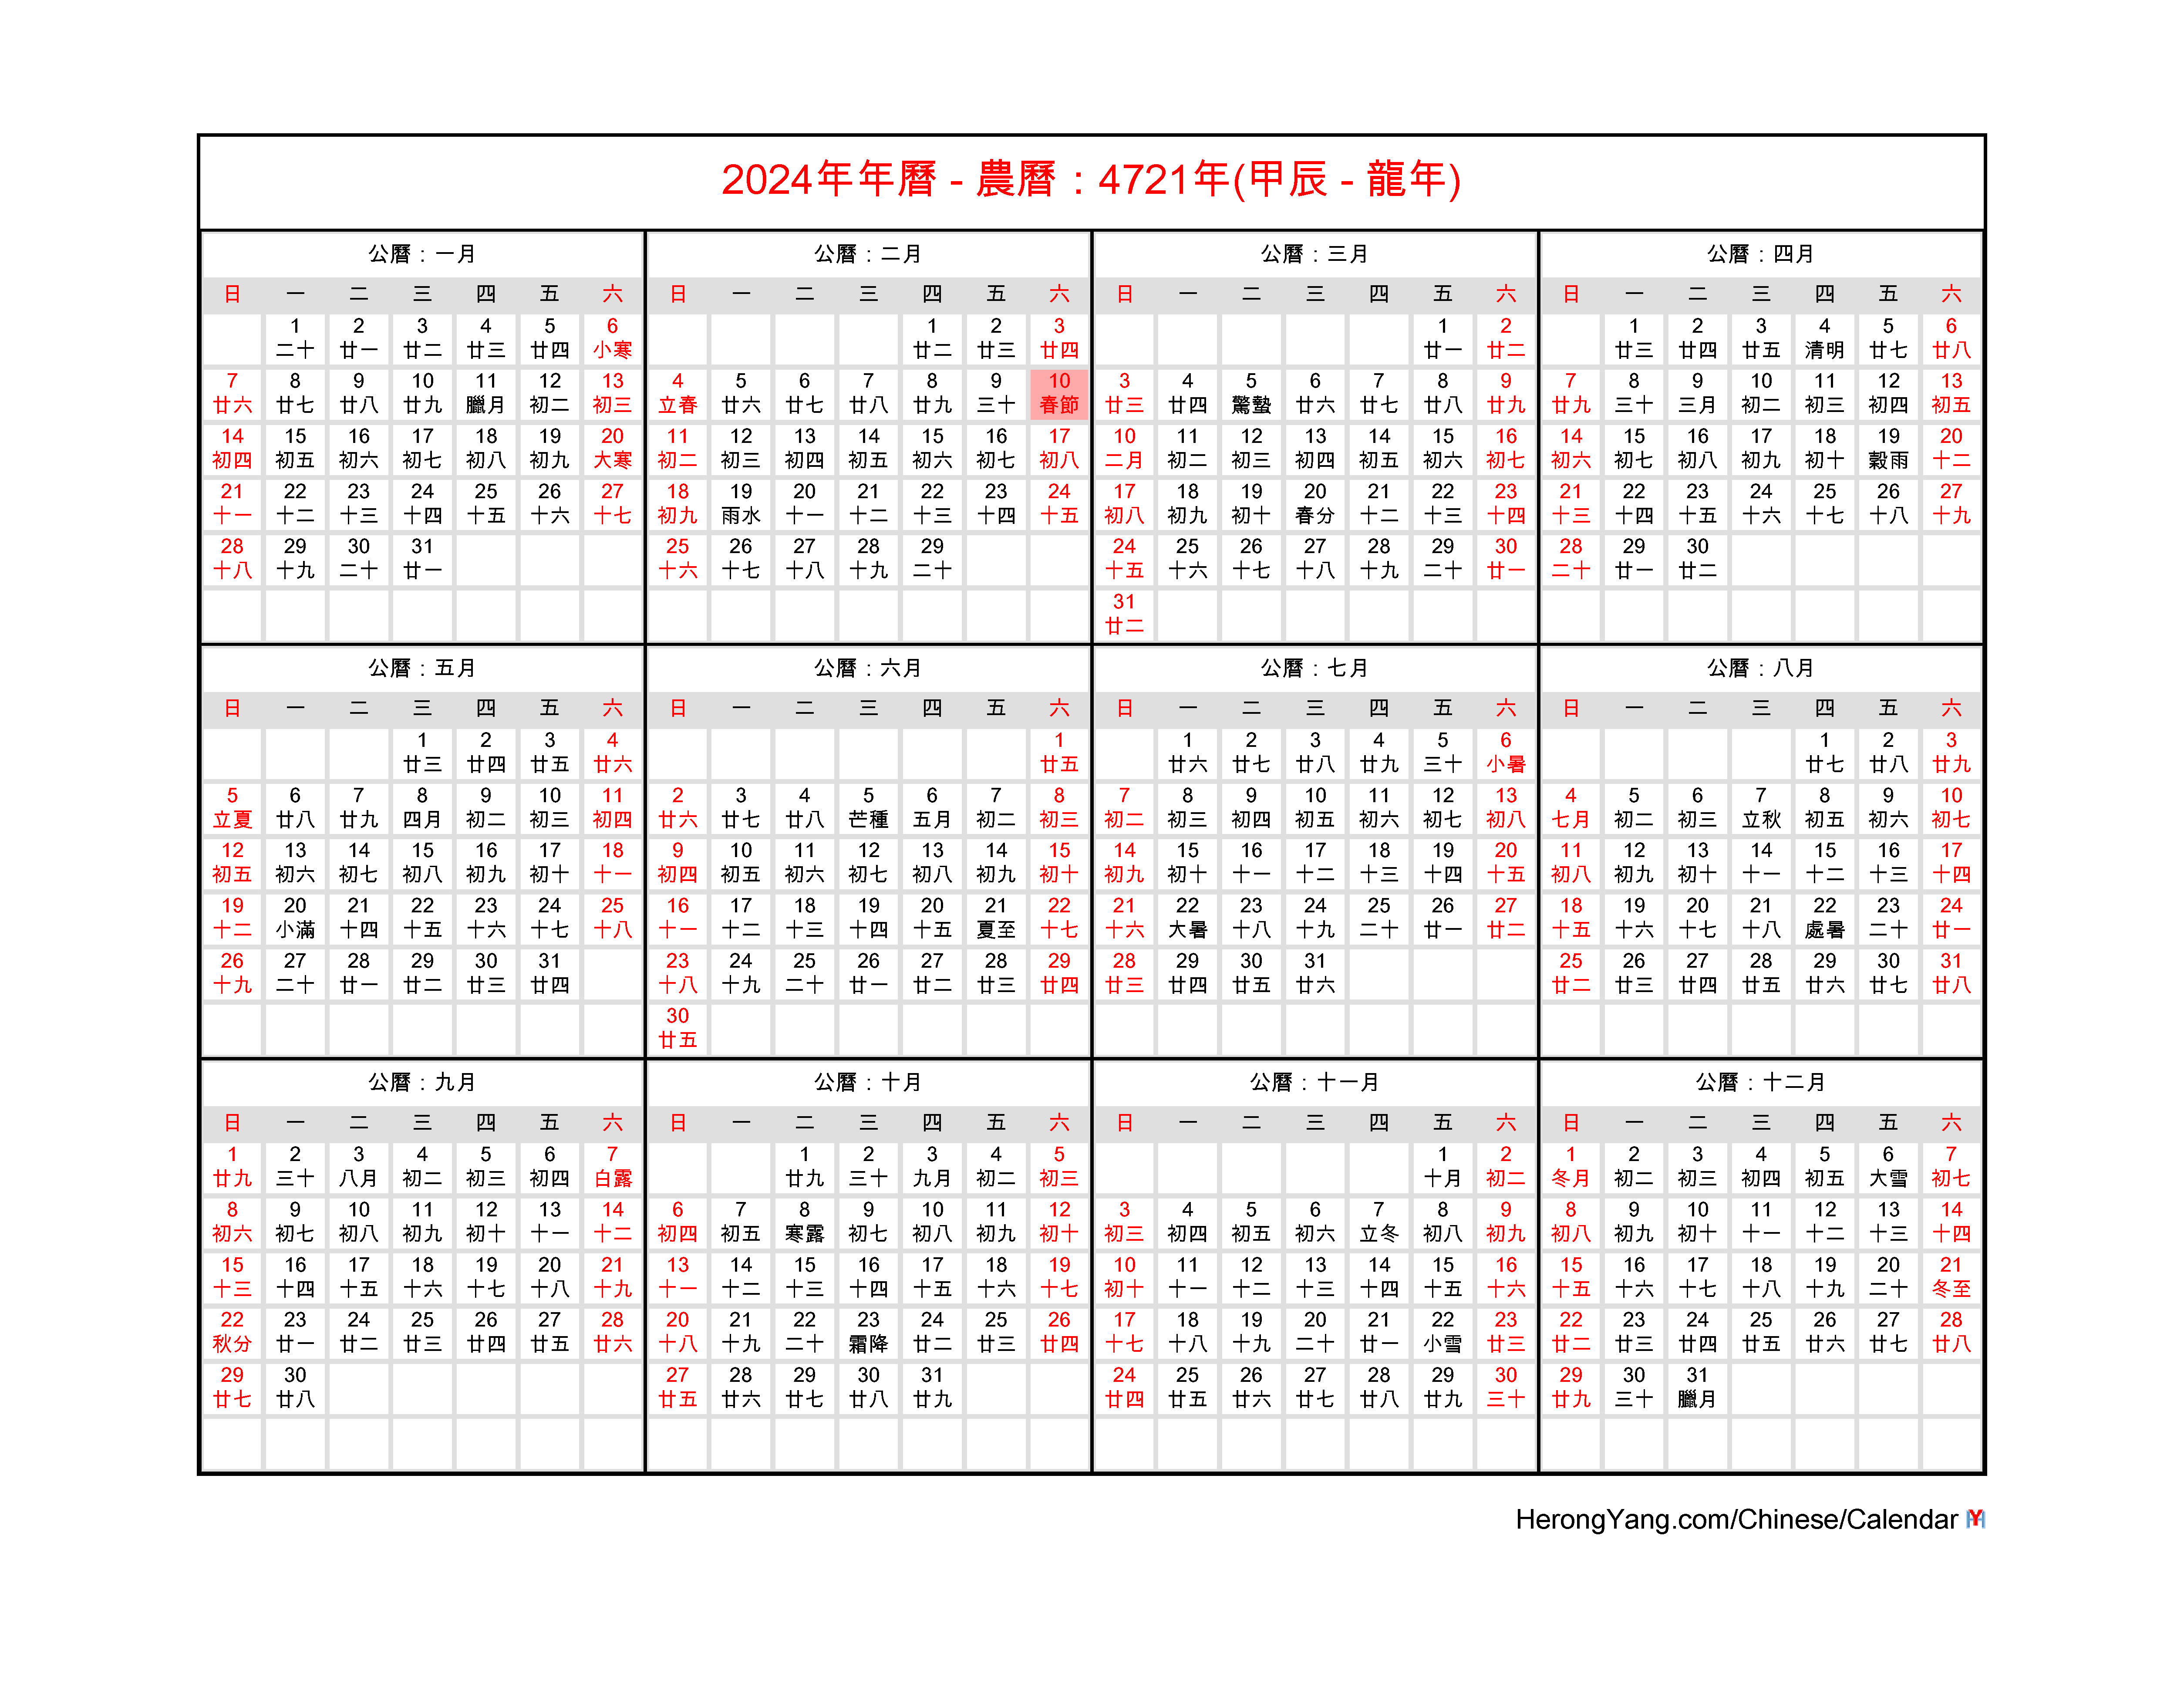 Chinese New Year 2024 Taiwan Calendar Image to u